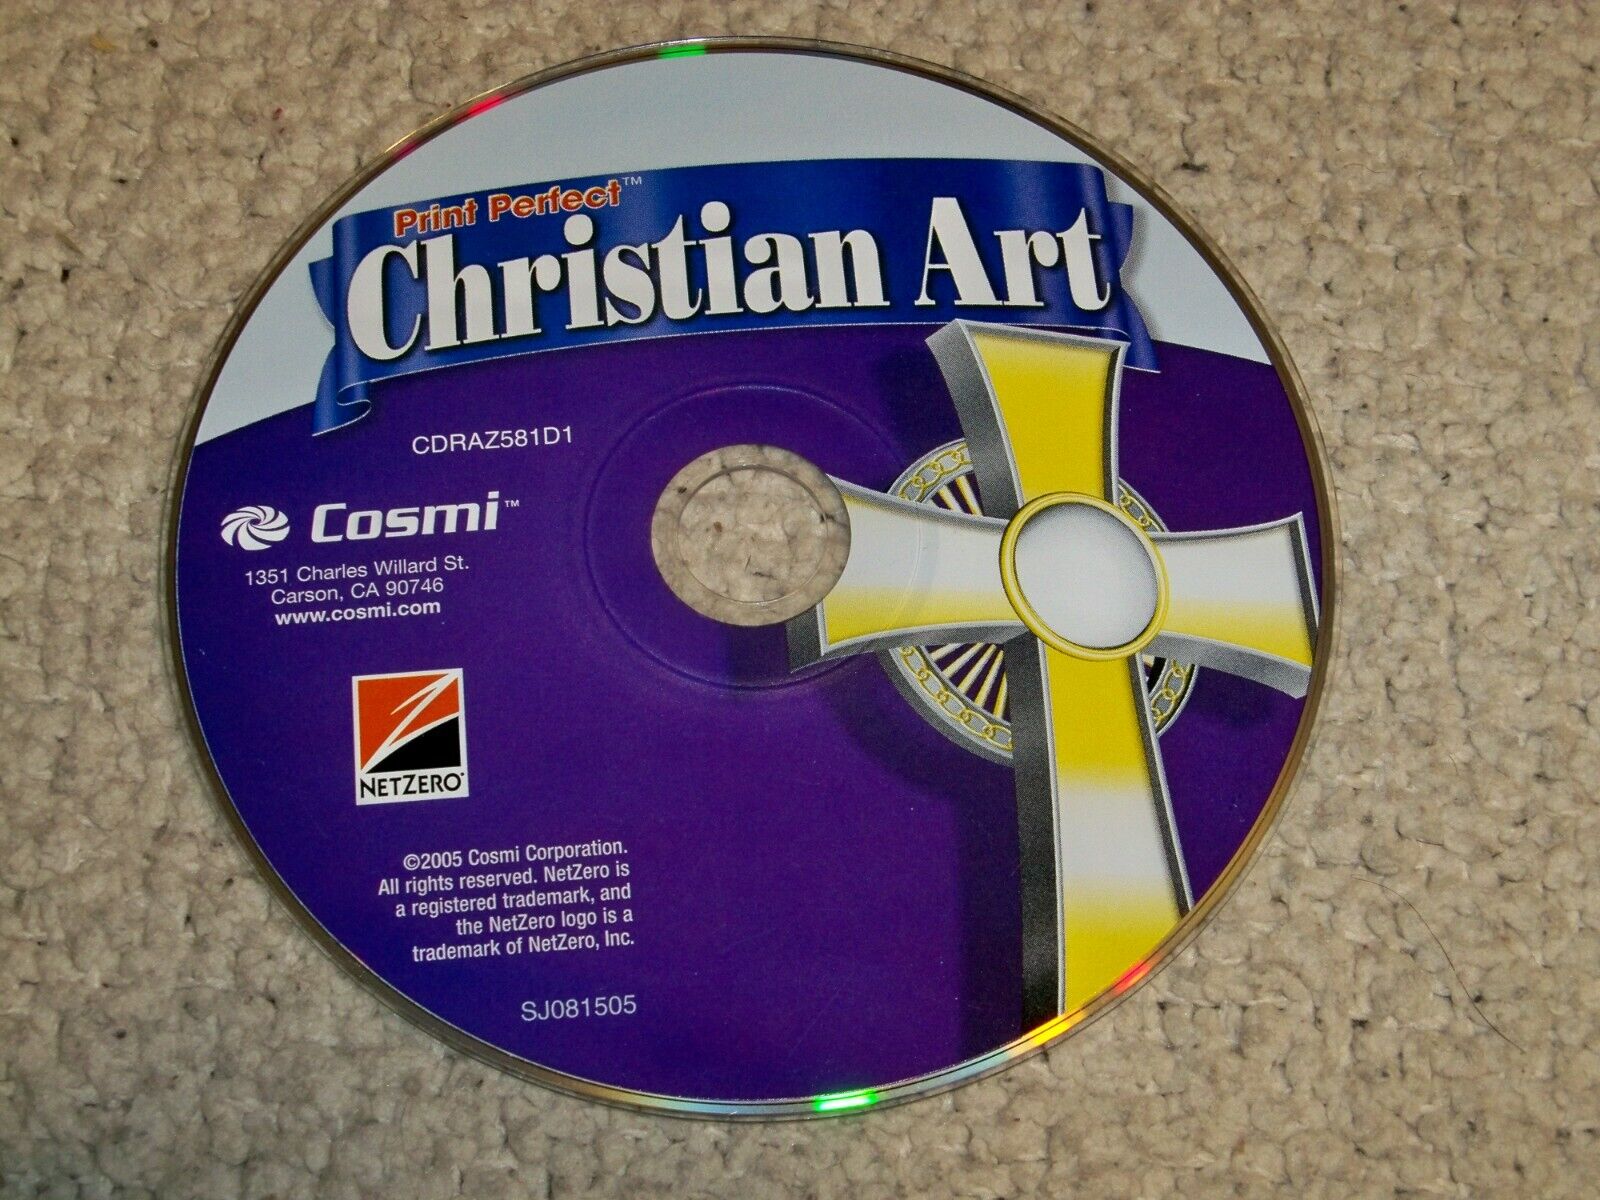 Cosmi Print Perfect Christian Art CD CDRAZ581D1